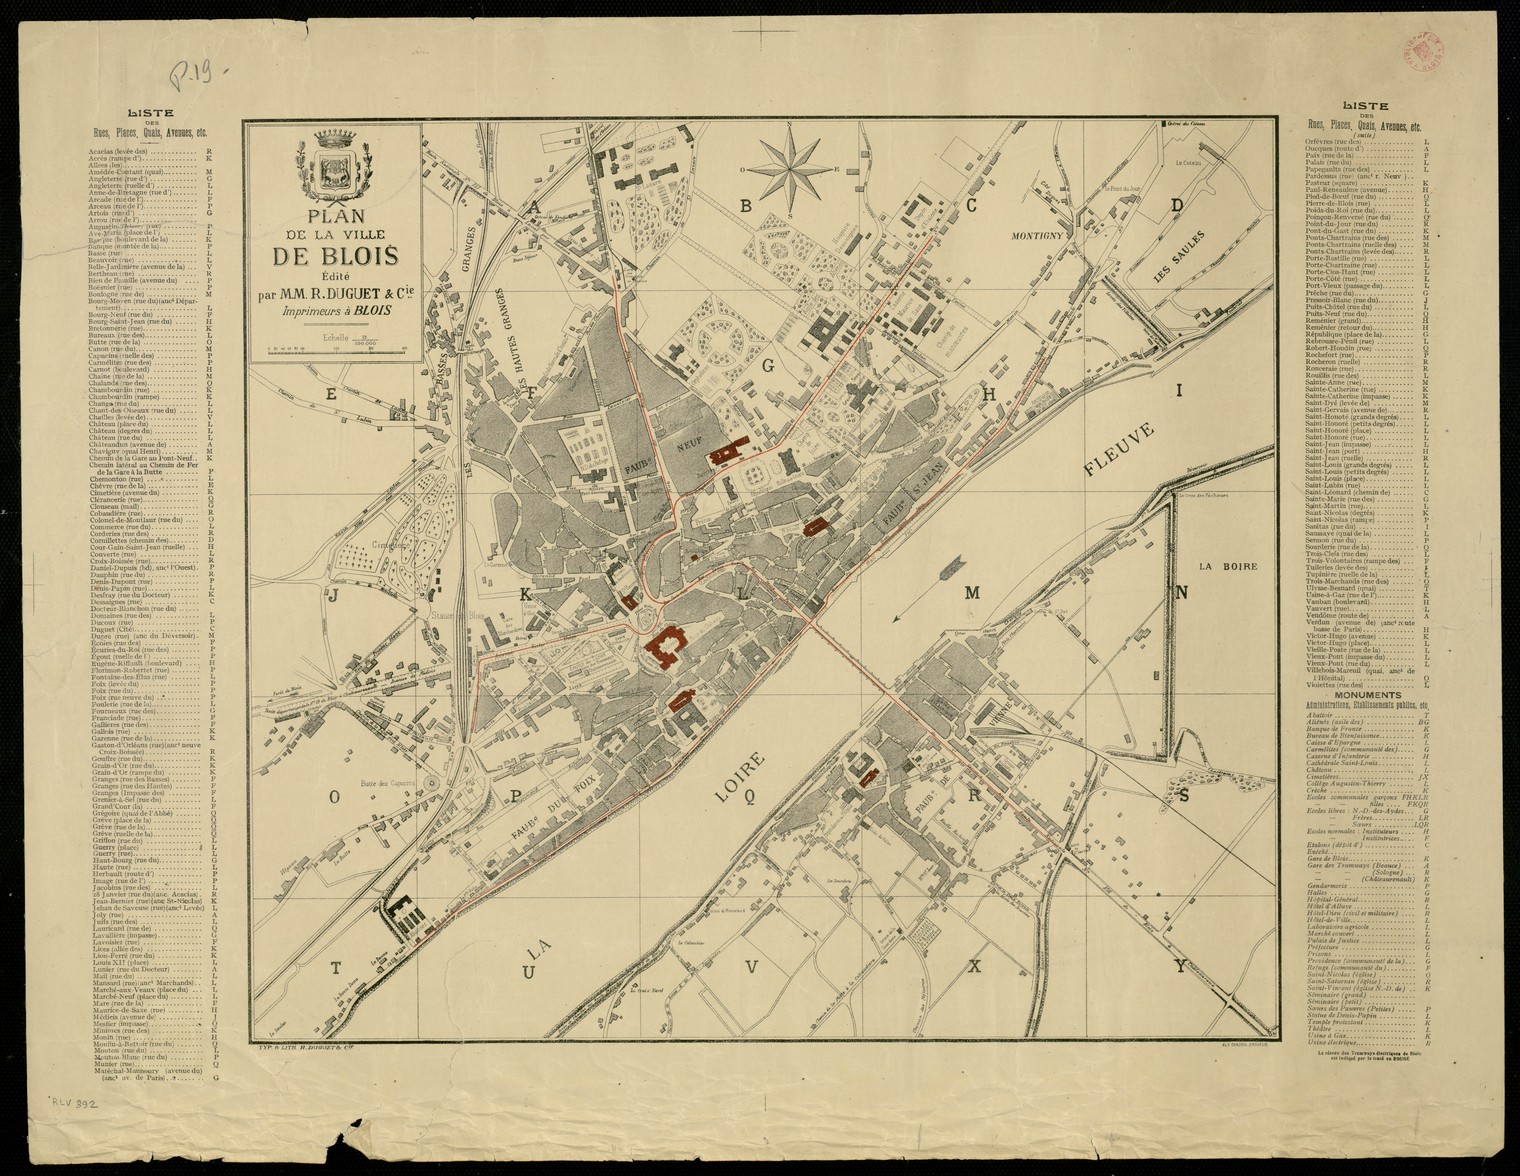 Duguet, plan de Blois, 1912